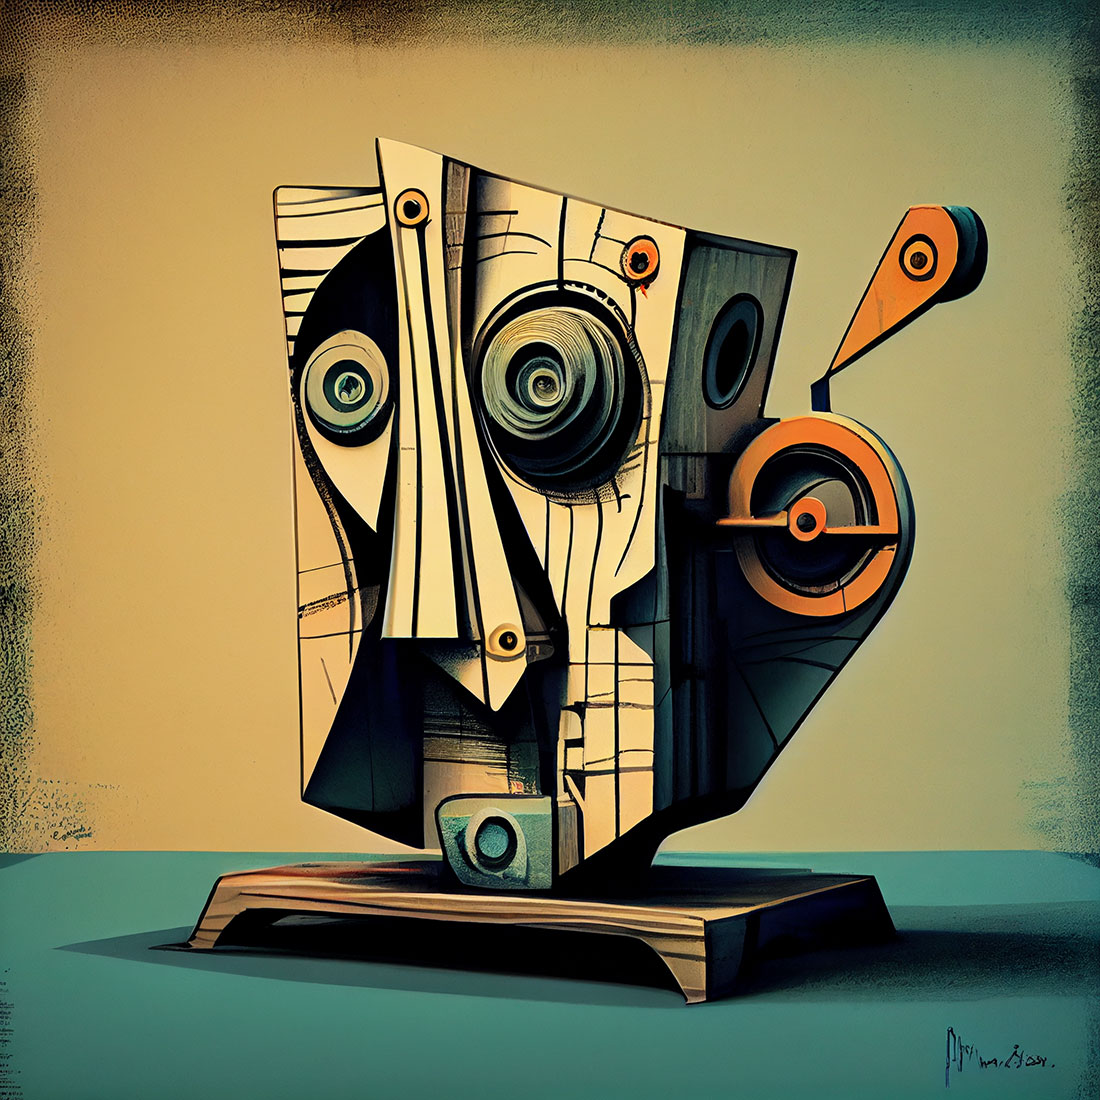 Ideas machine inspired bay Pablo Picasso